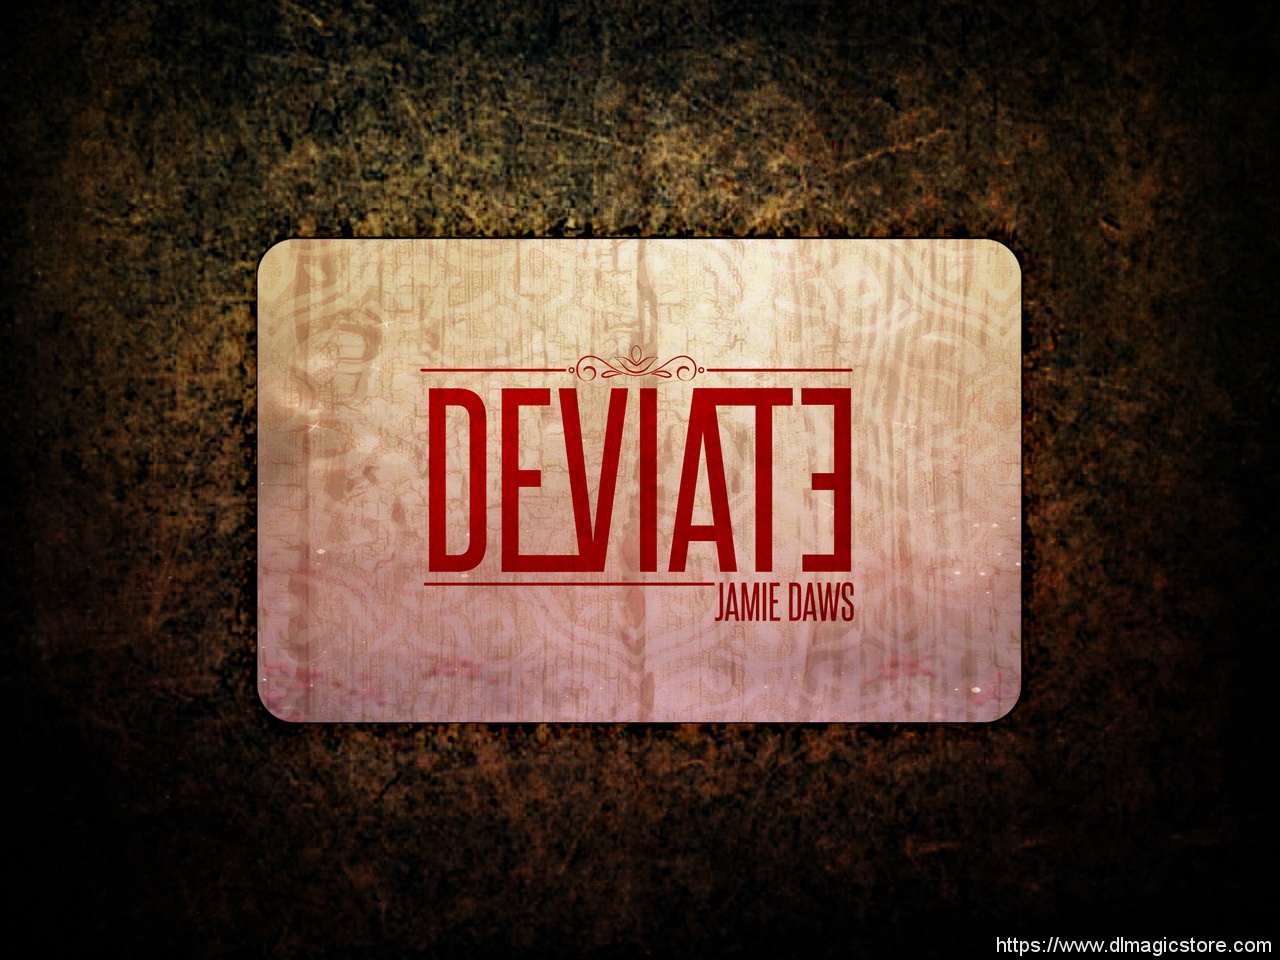 Deviate by Jamie Daws (Instant Download)